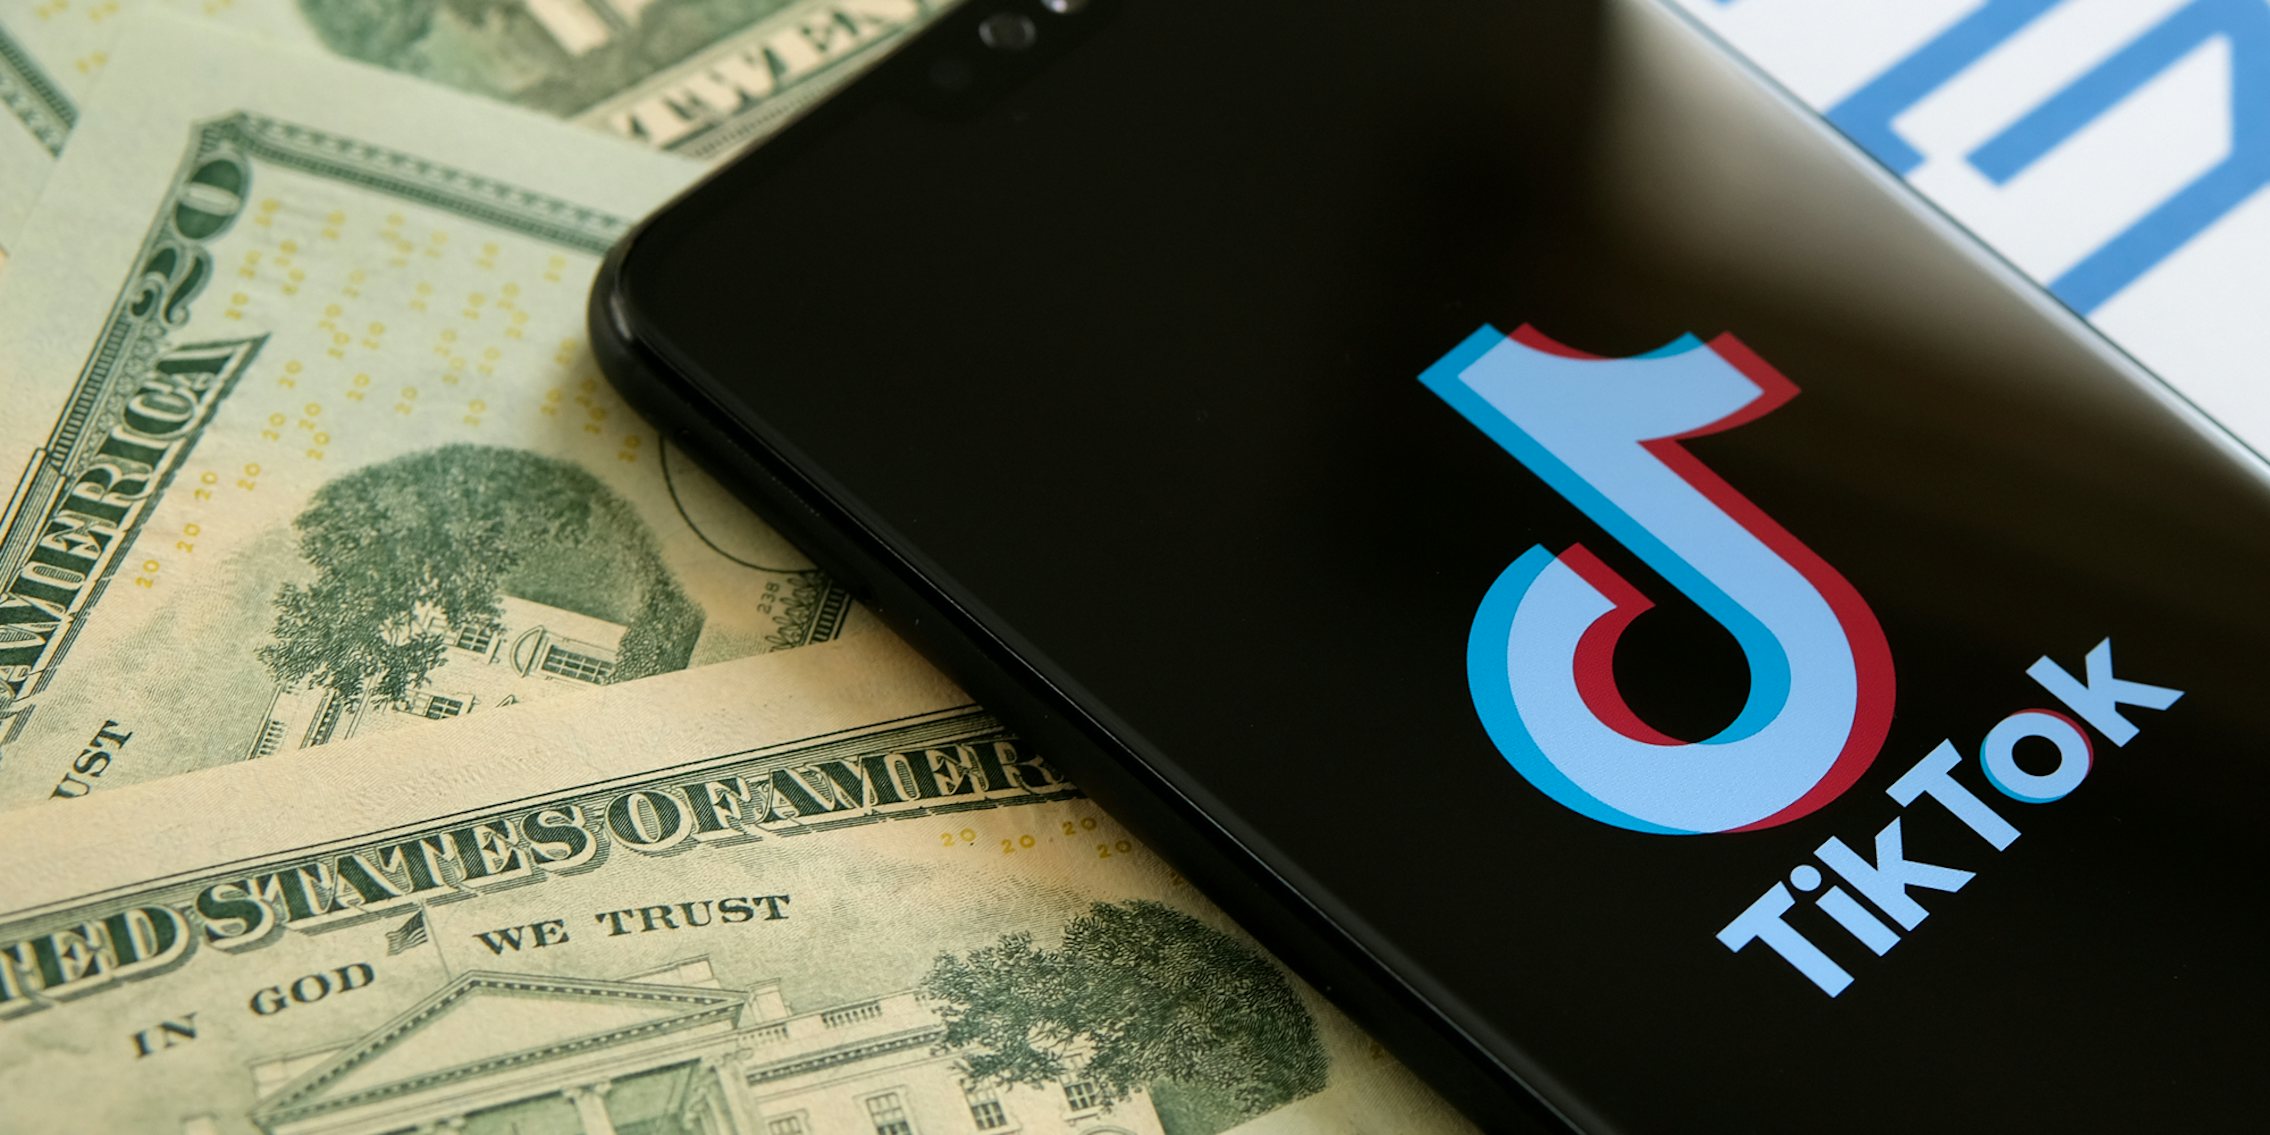 A phone showing the TikTok logo next to $20 bills.